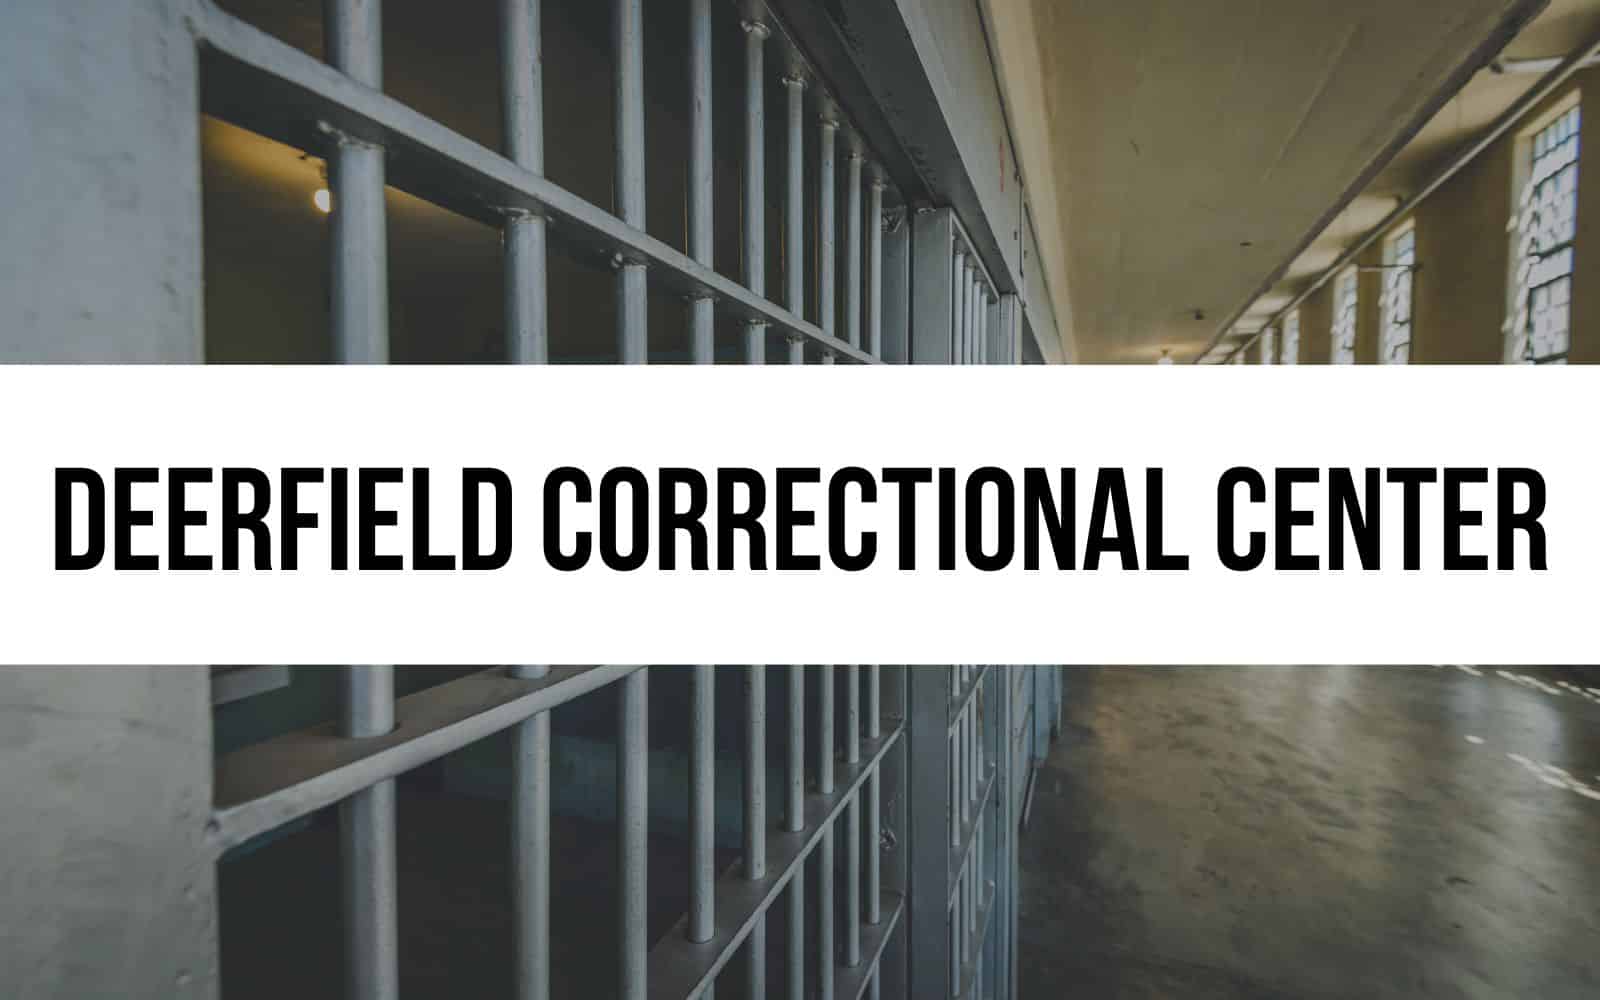 Deerfield Correctional Center